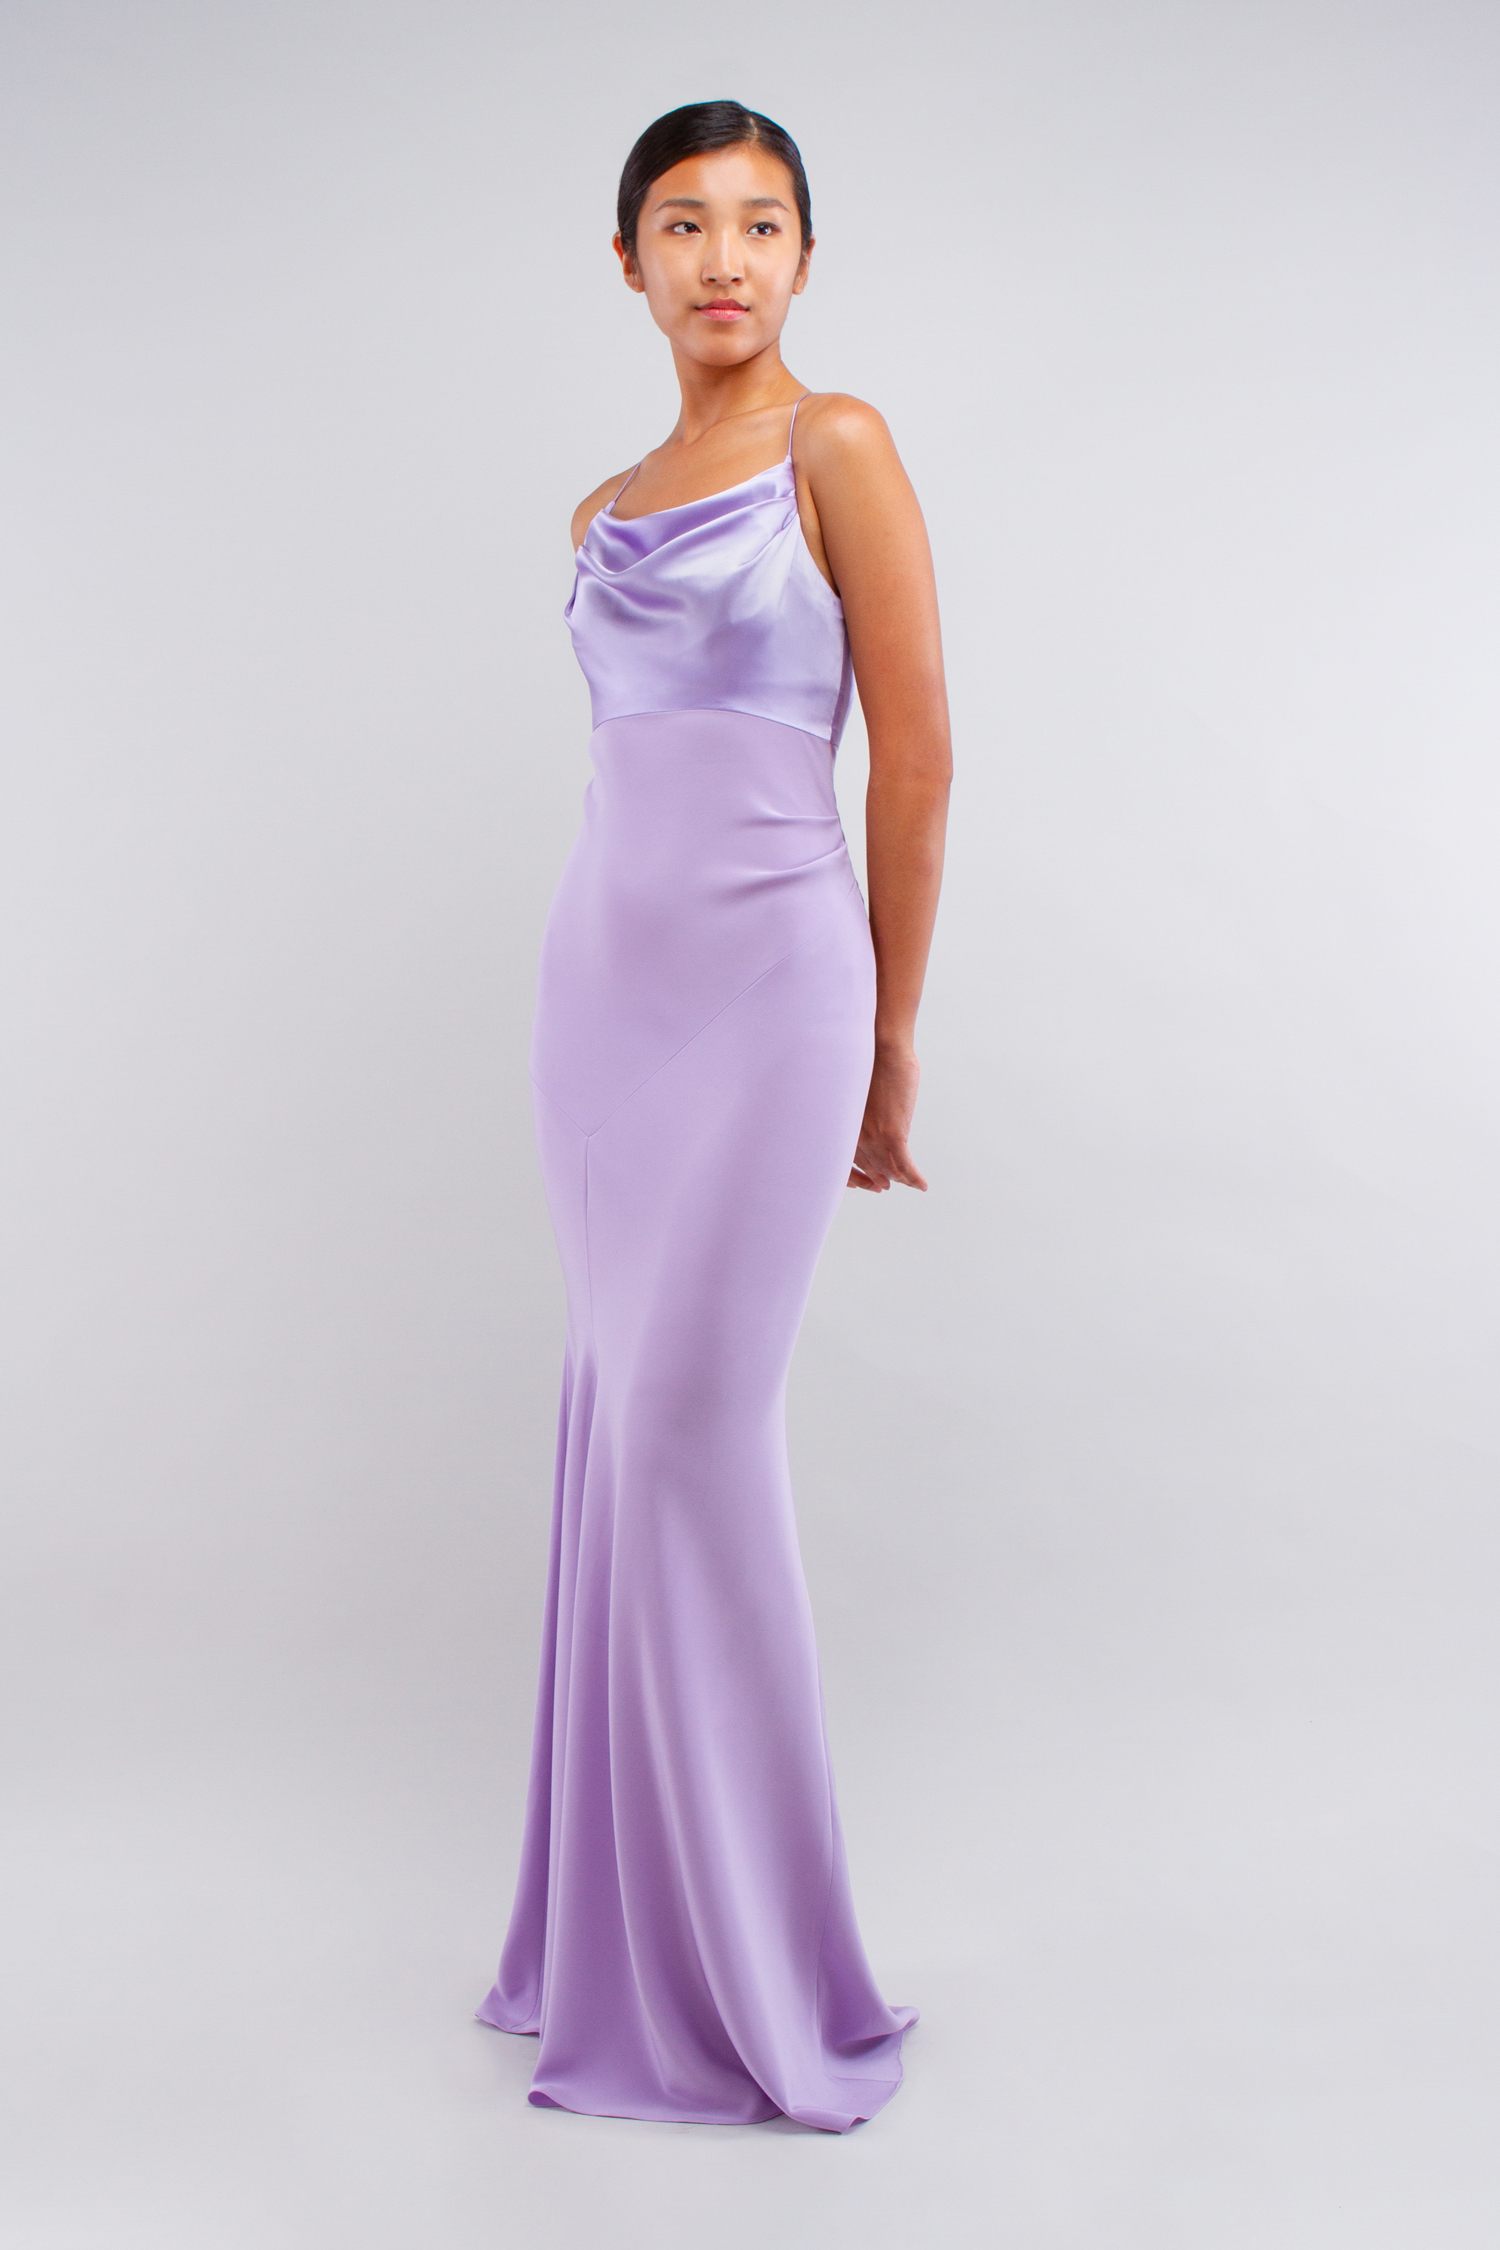 Spaguethi strapps style dress in purple silk and long - Believe Look 8 - Verdin New York